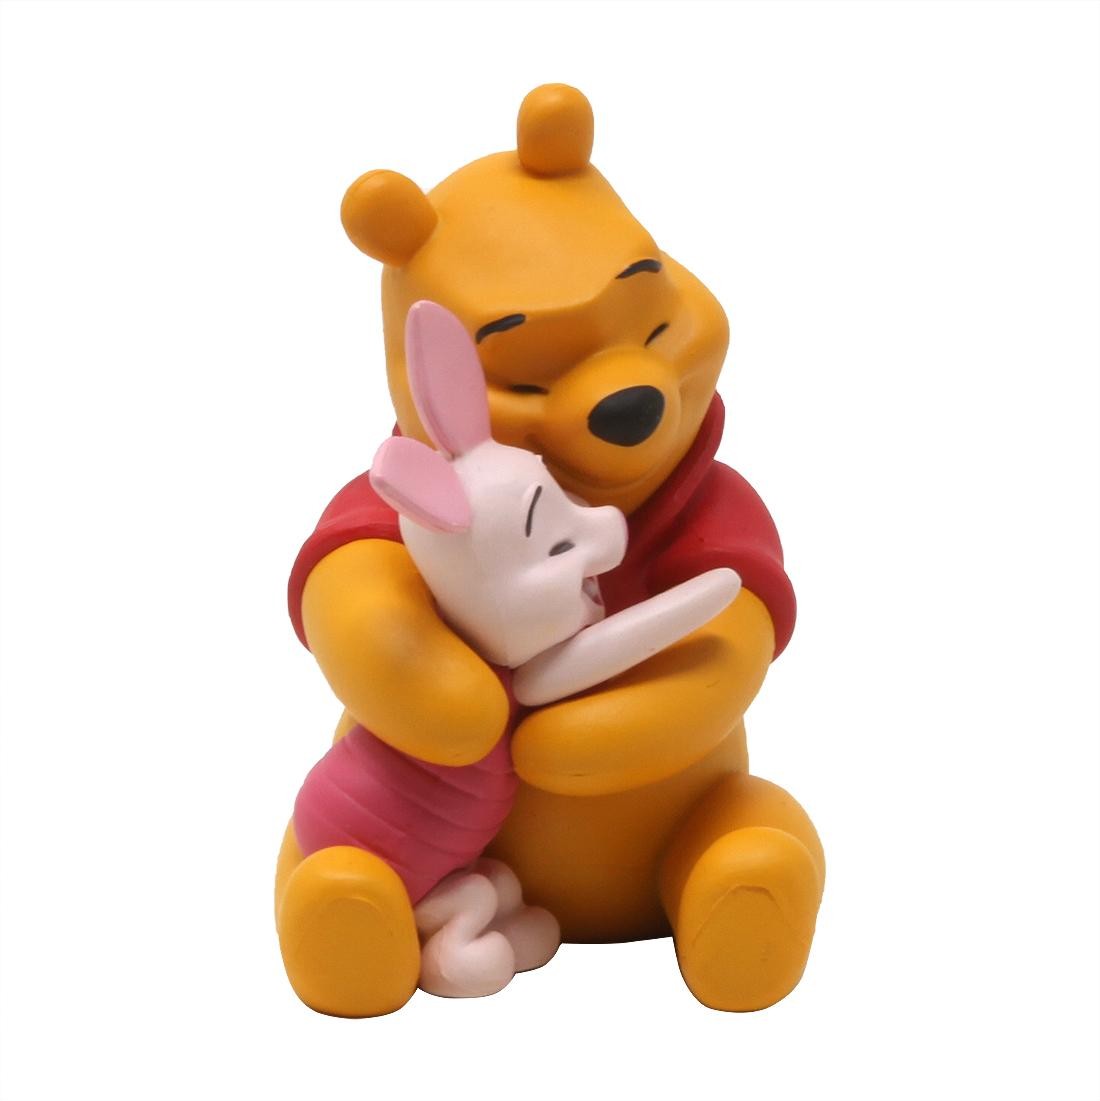 Medicom UDF Disney Series 7 Winnie The Pooh And Piglet Ultra Detail Figure (yellow)